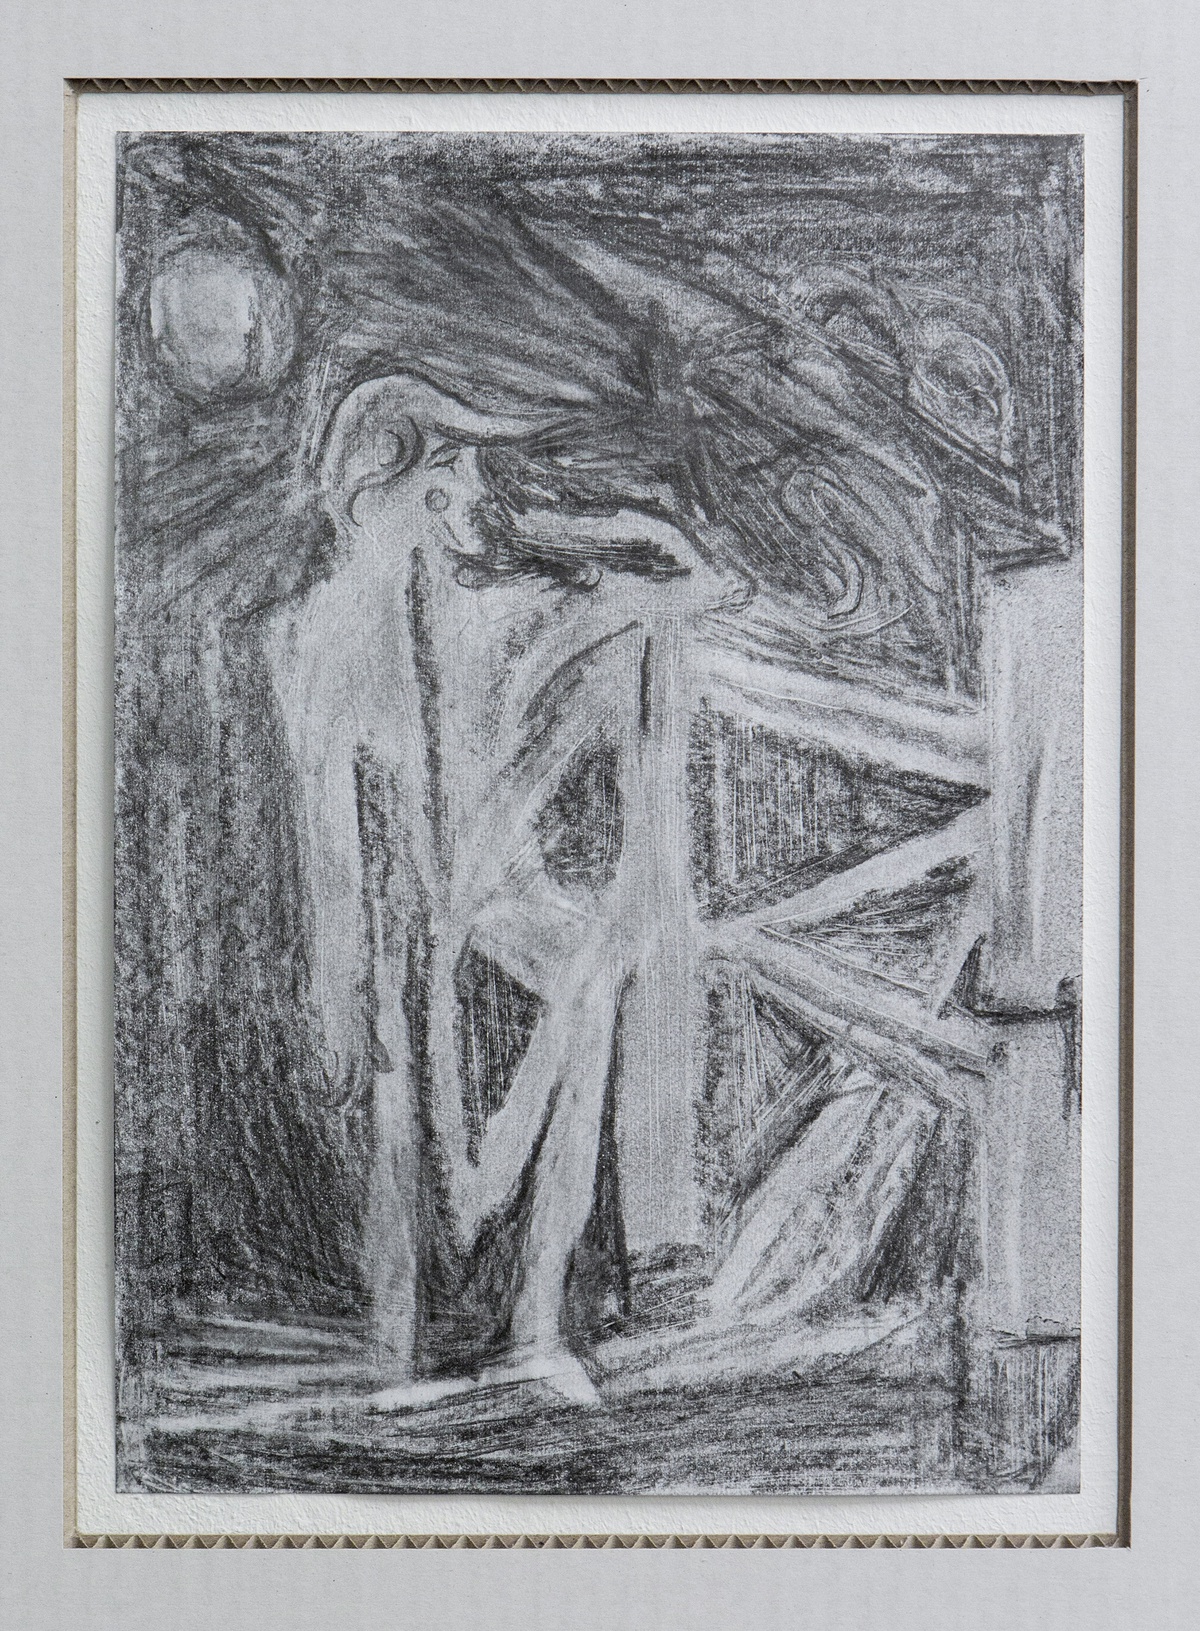 Philipp Simon, image, natural, drama, man, life, wind, boredom, isolation, handsome, q&amp;d, freedom, vangogh, desire, 2017pencil on paper29,7 cm x 21 cm